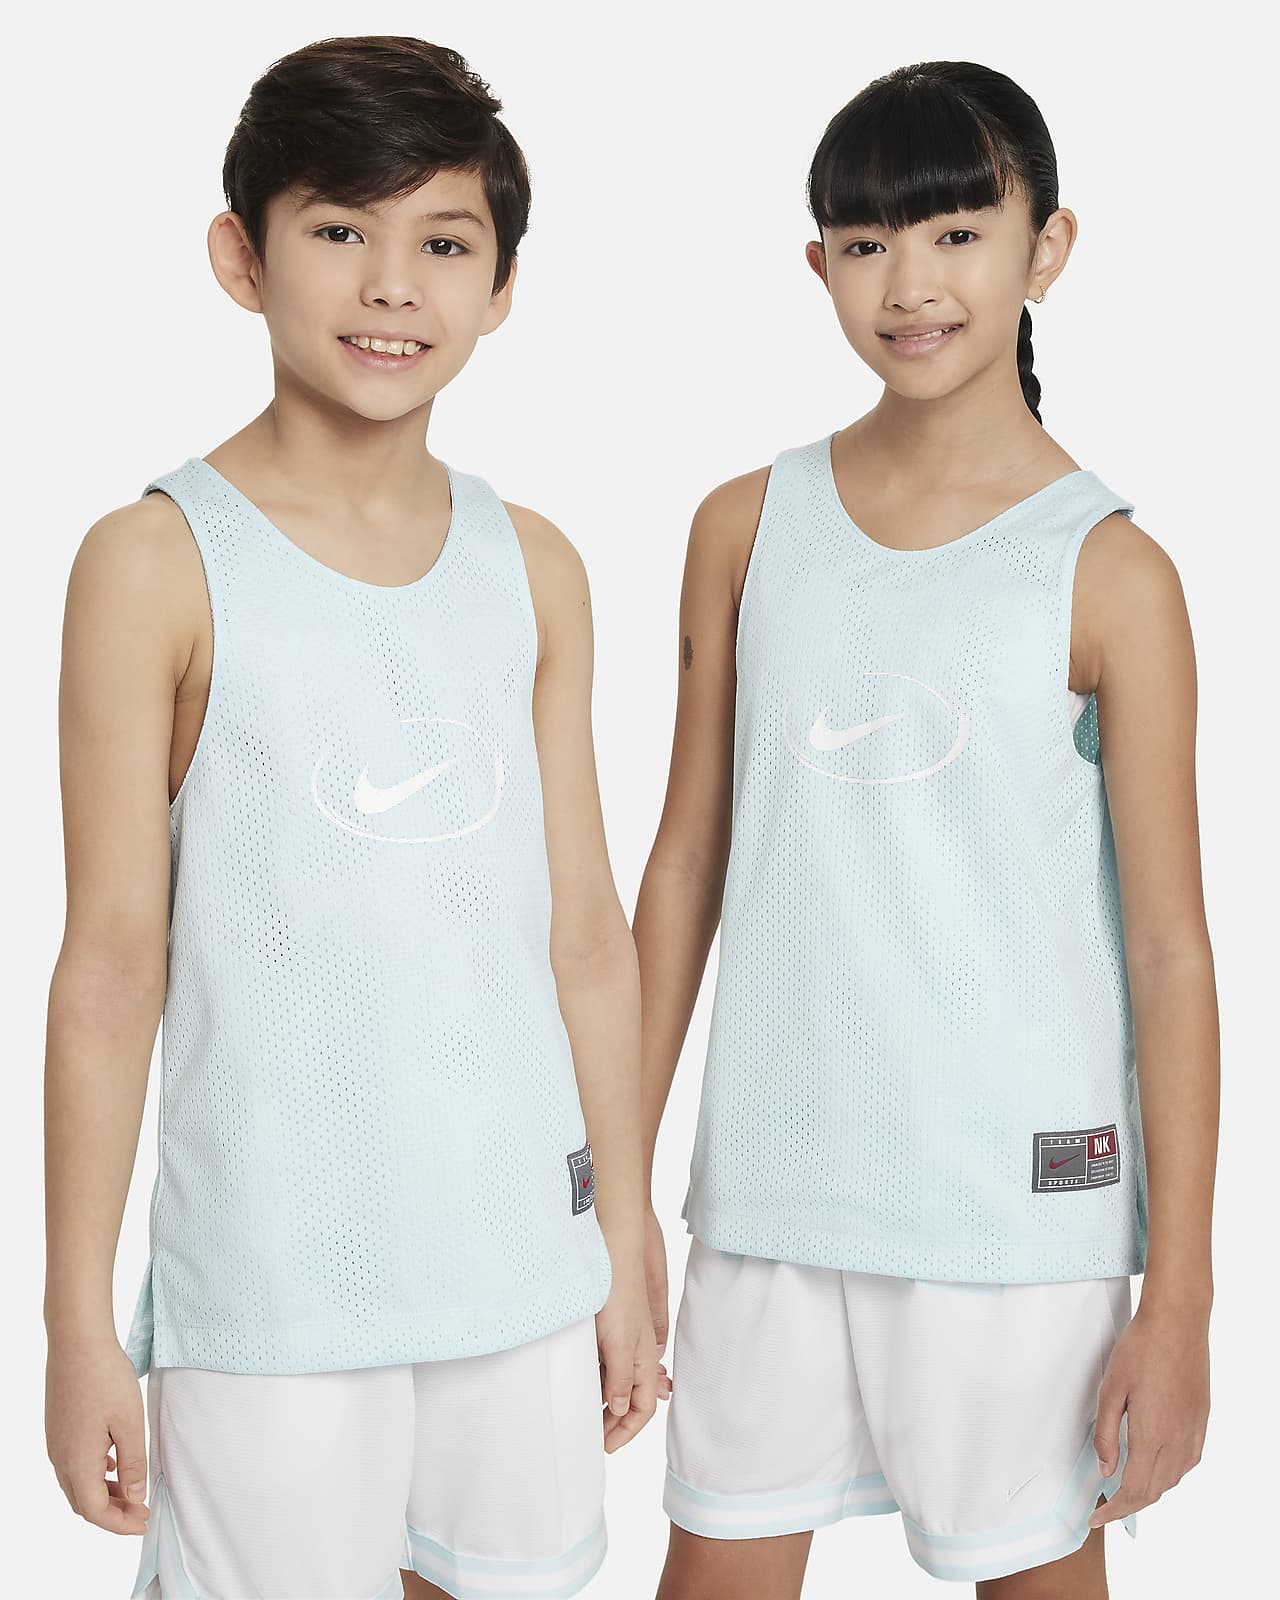 Nike Culture of Basketball Samarreta reversible - Nen/a